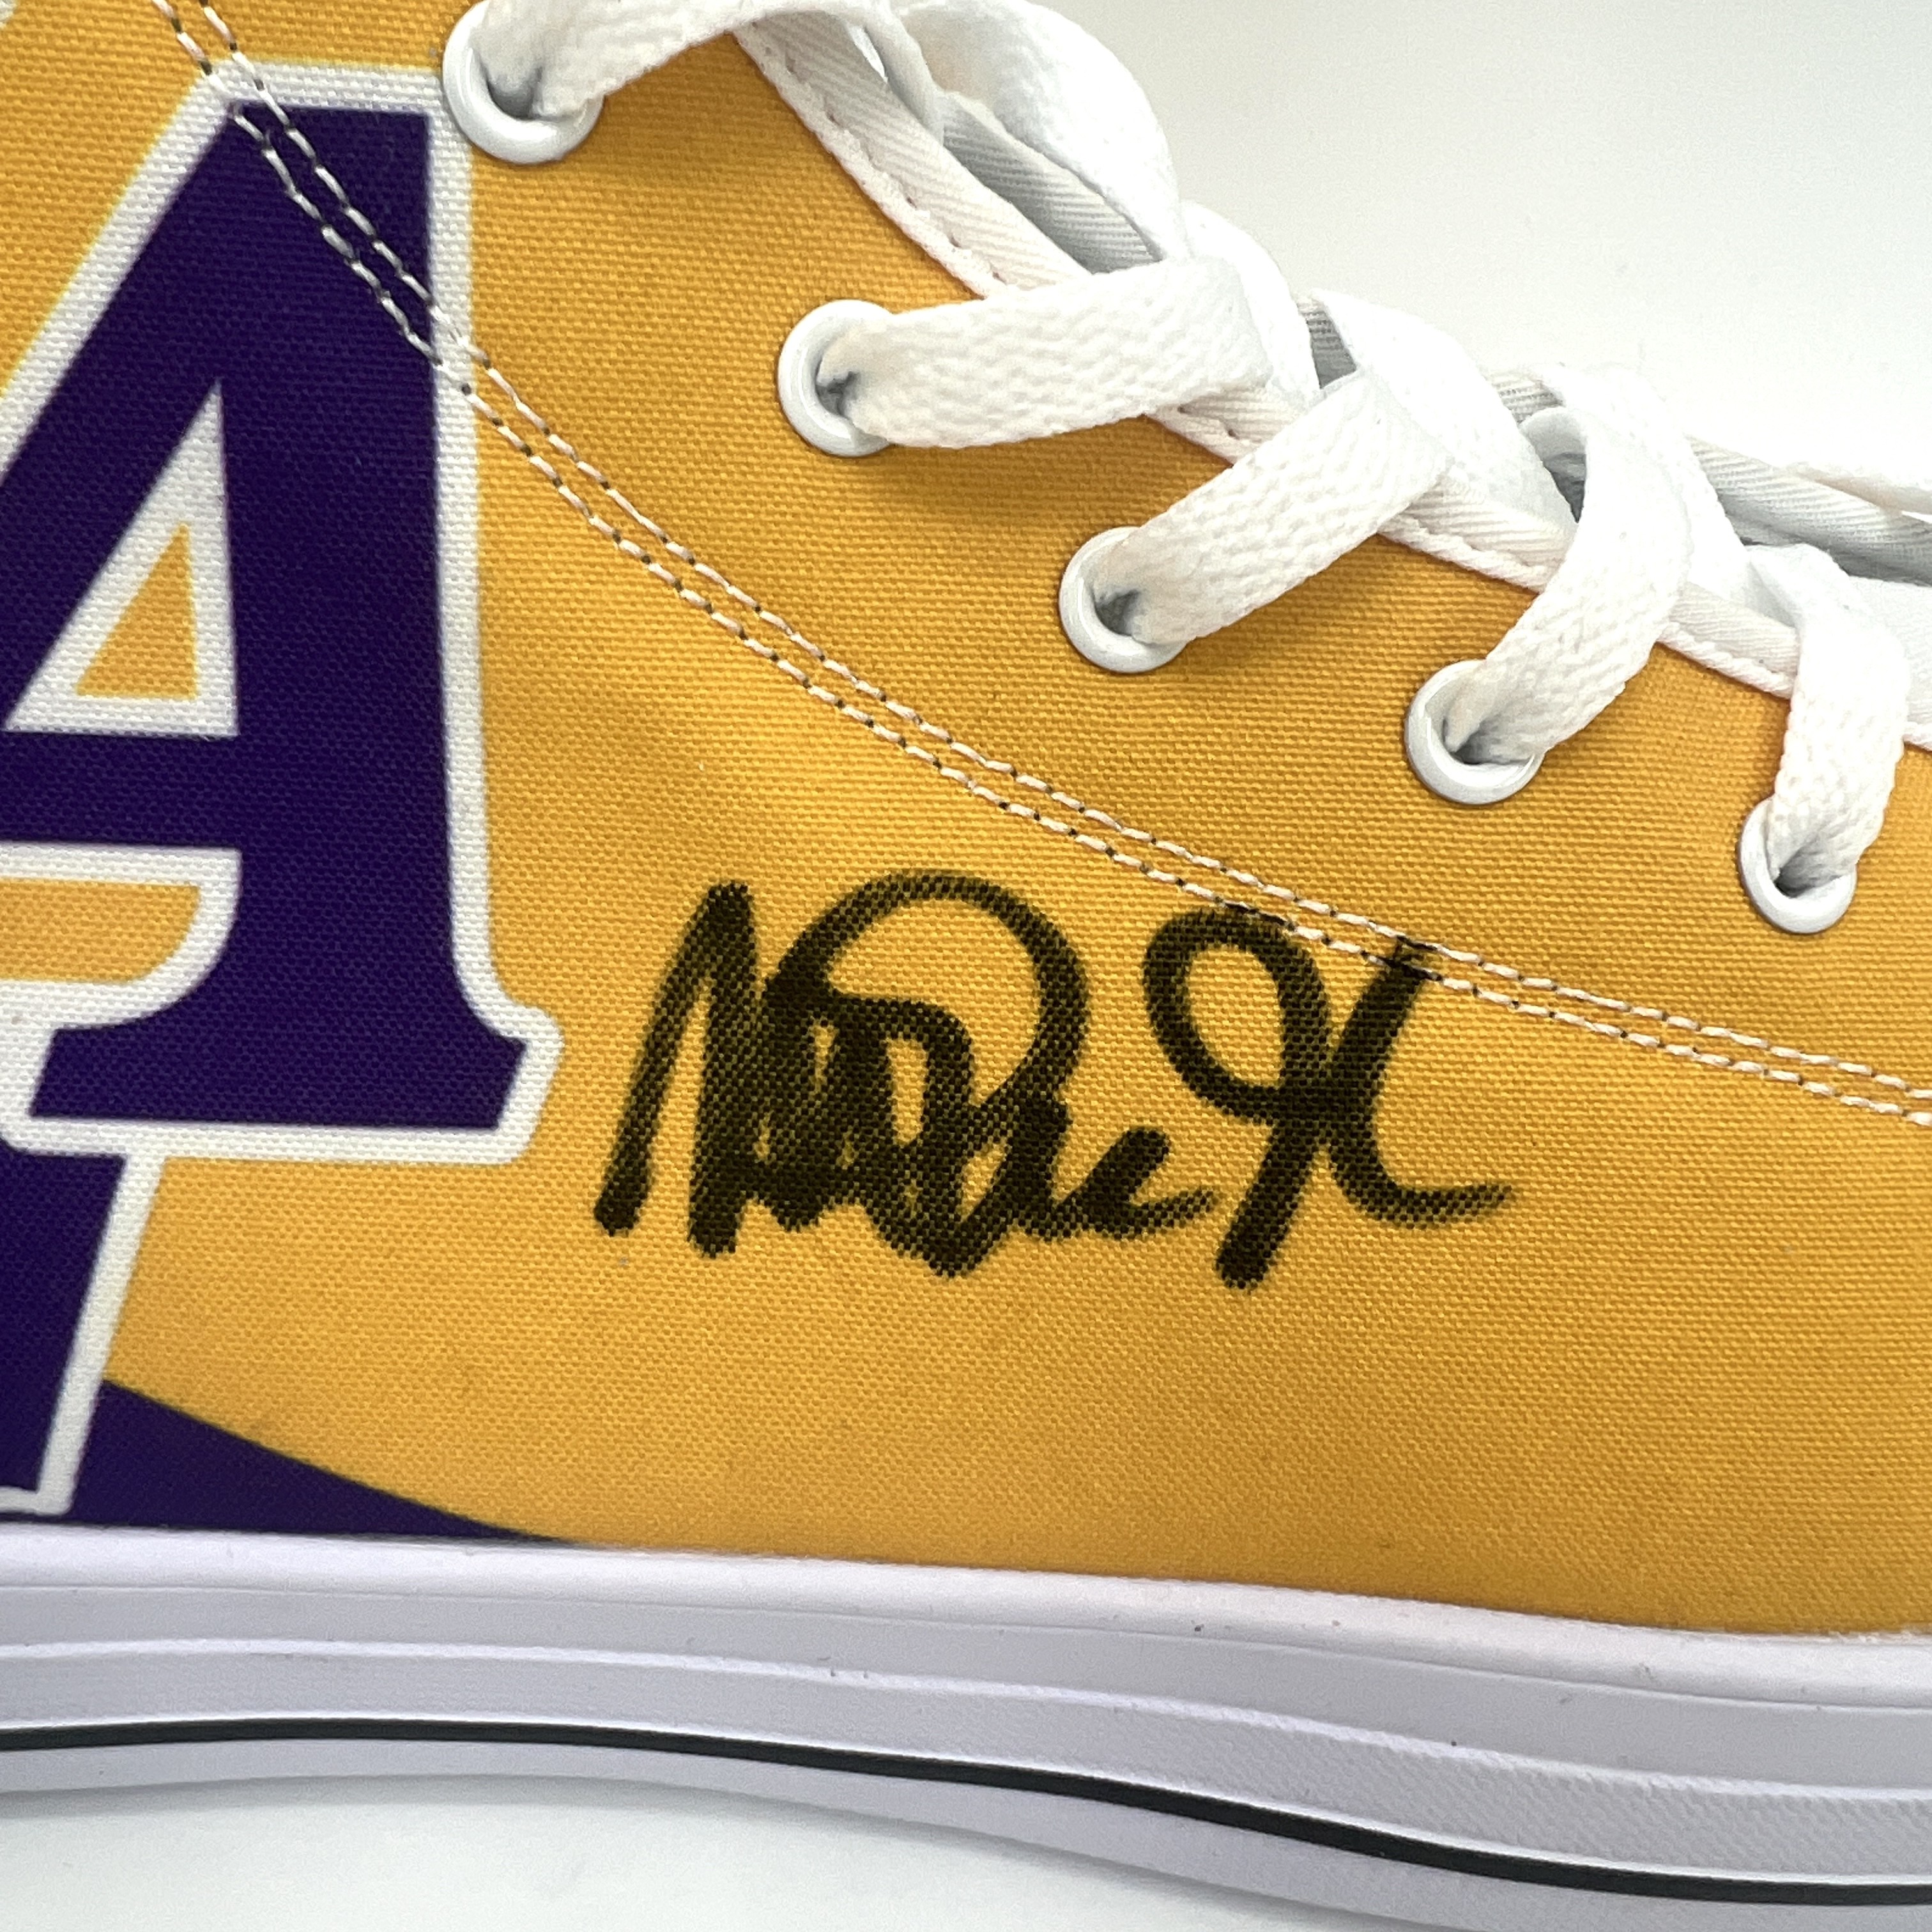 Magic Johnson Signed Converse Shoe in Display Case - CharityStars